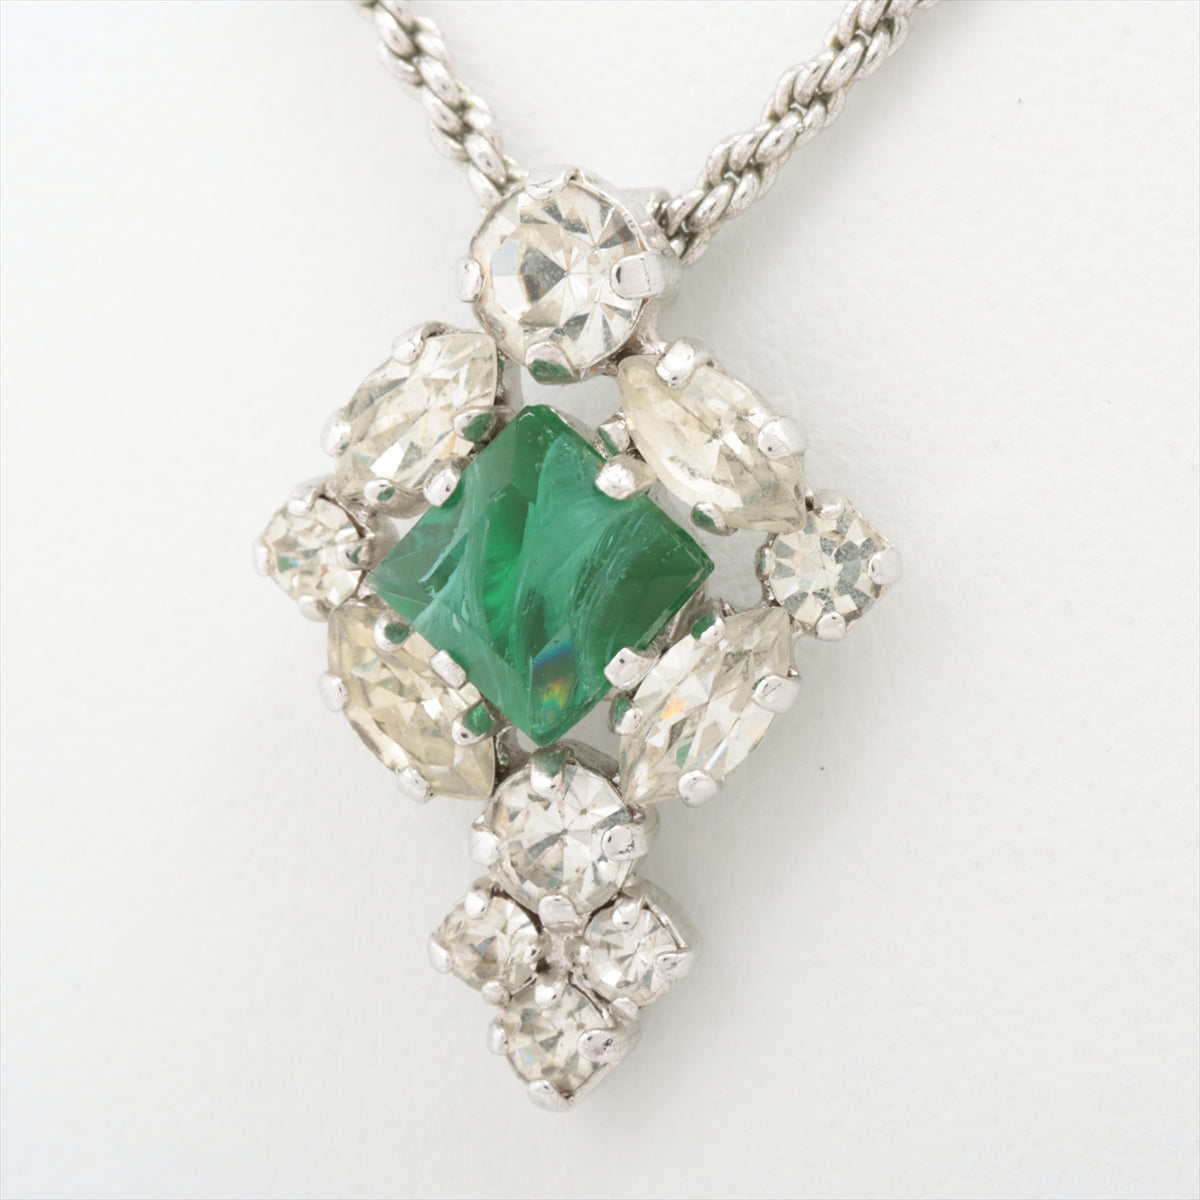 Christian Dior Necklace Metal x rhinestone Silver x green  Color stone